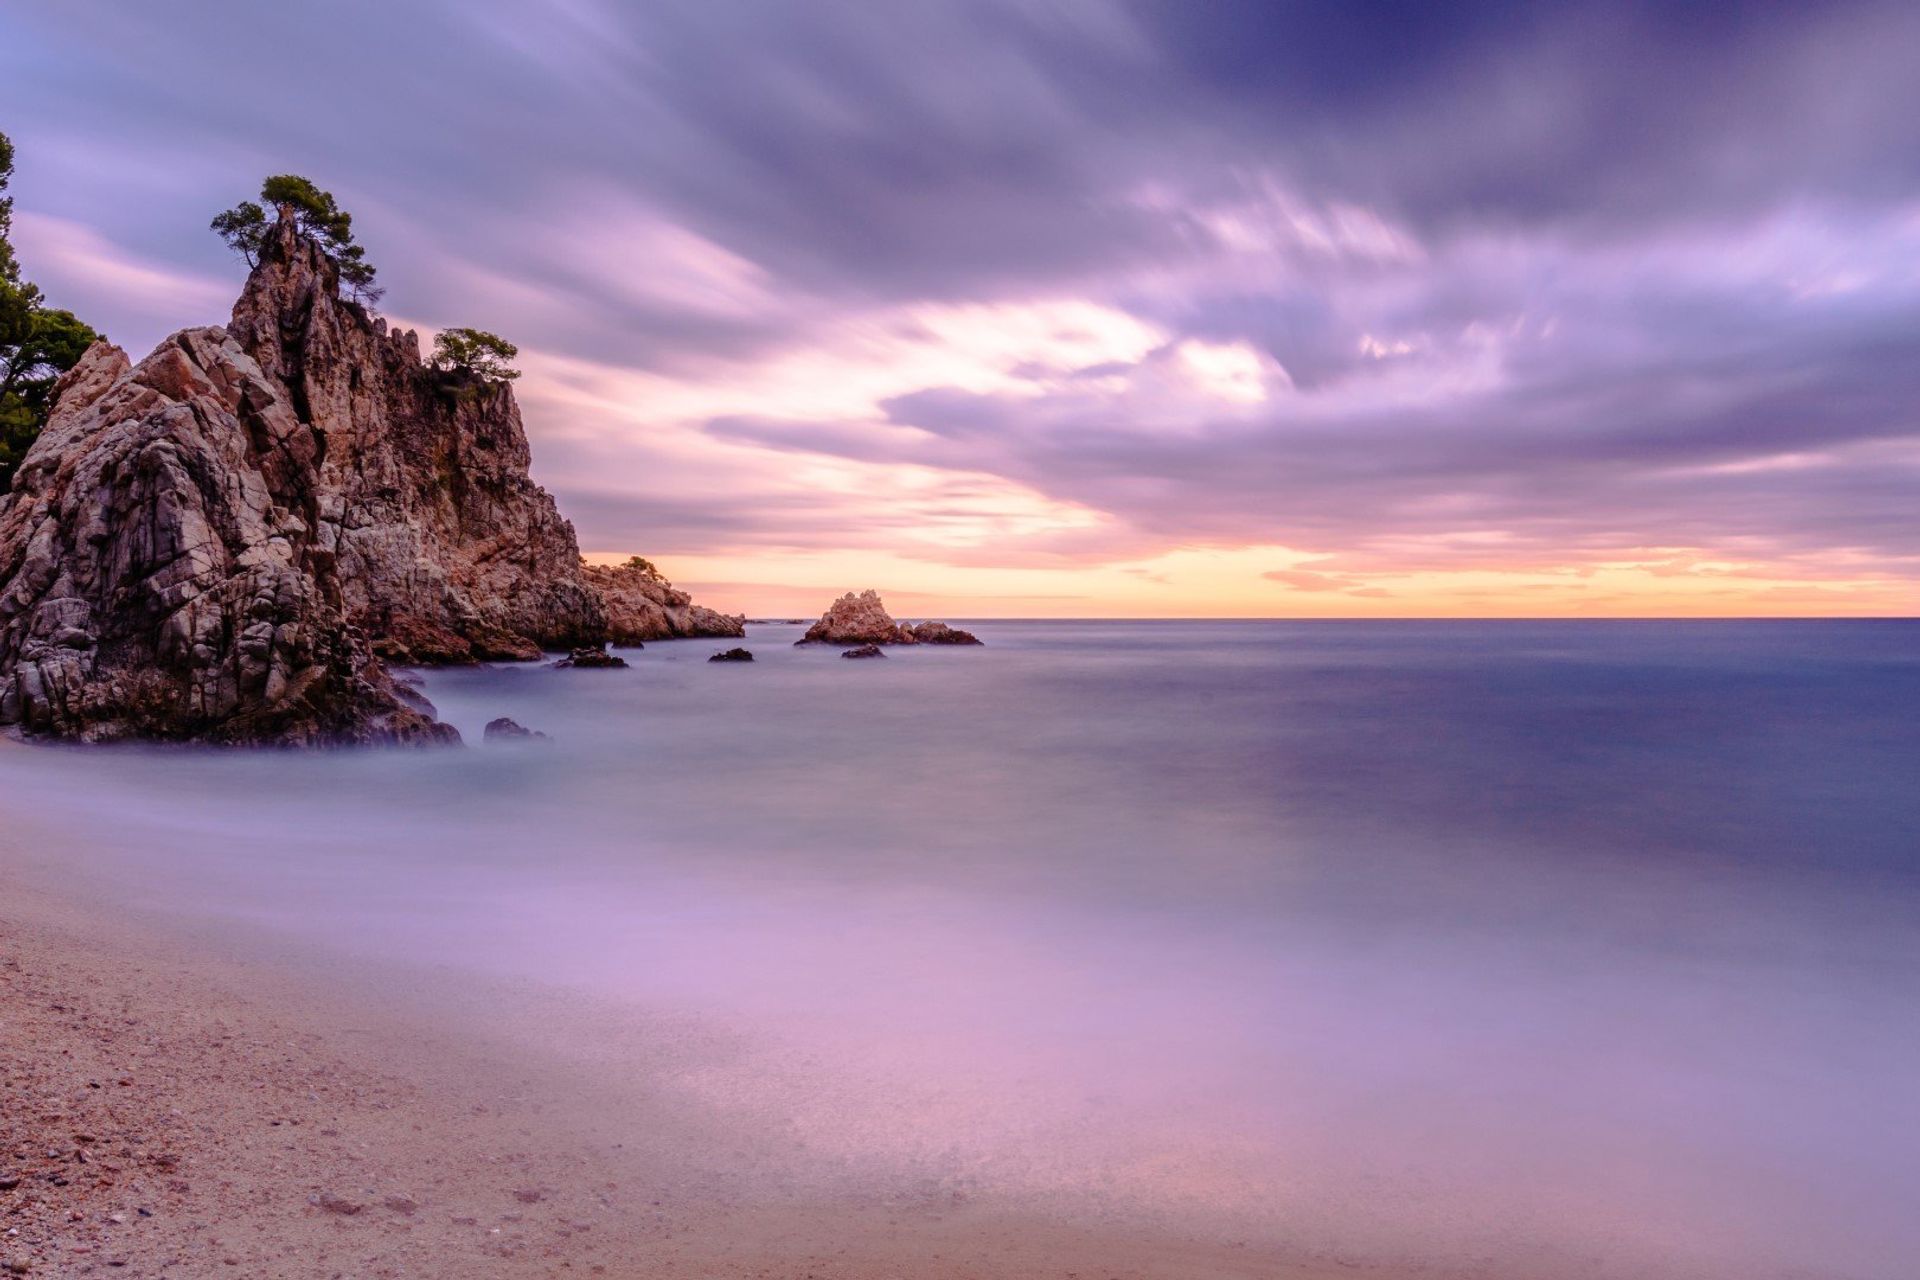 Begur's quiet coast boasts some beautiful romantic sunsets